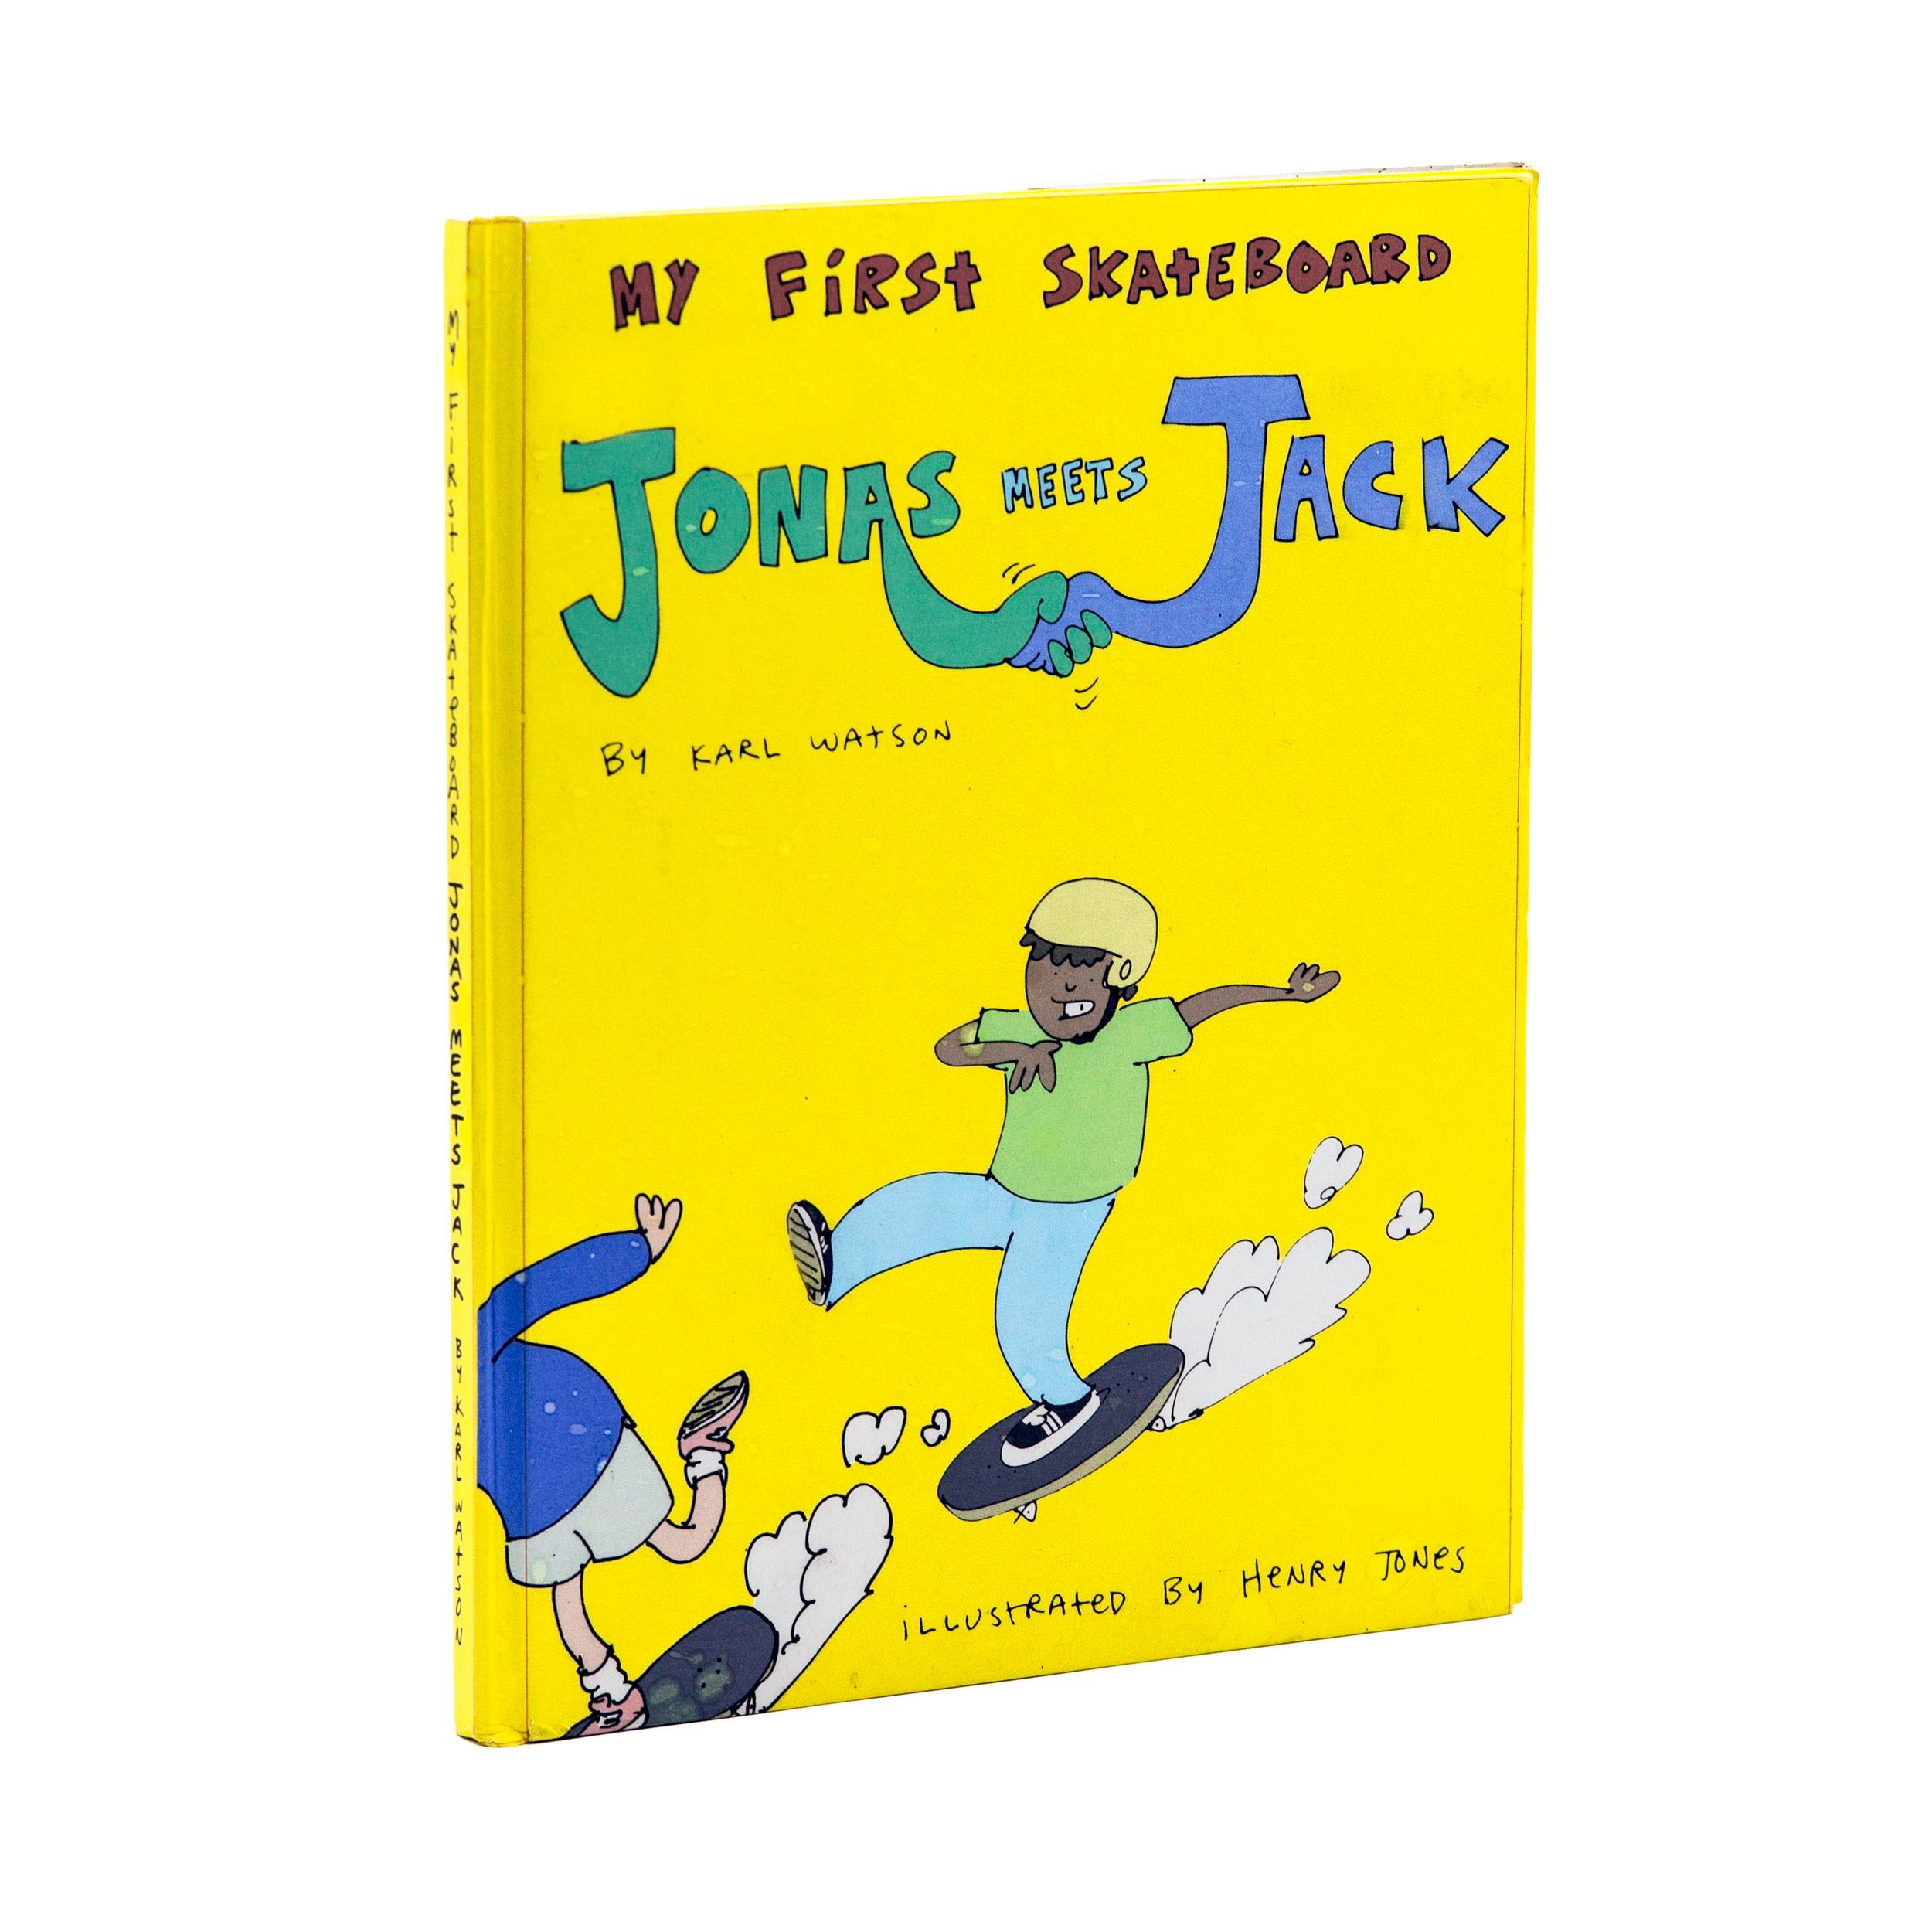 Jonas meets Jack (Book)